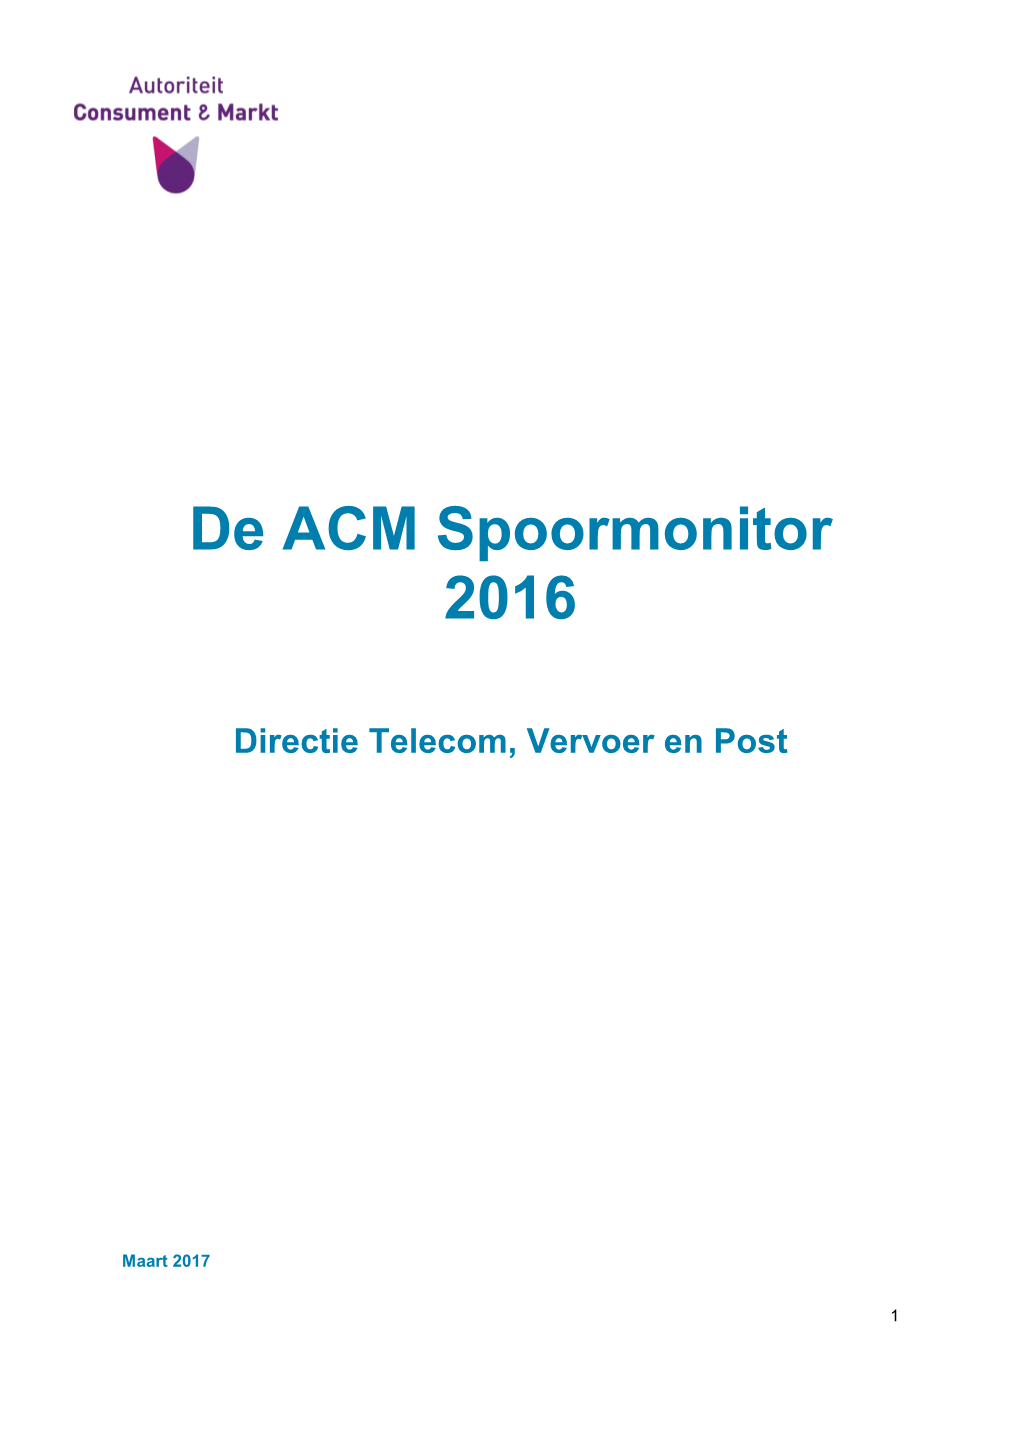 ACM Spoormonitor 2016